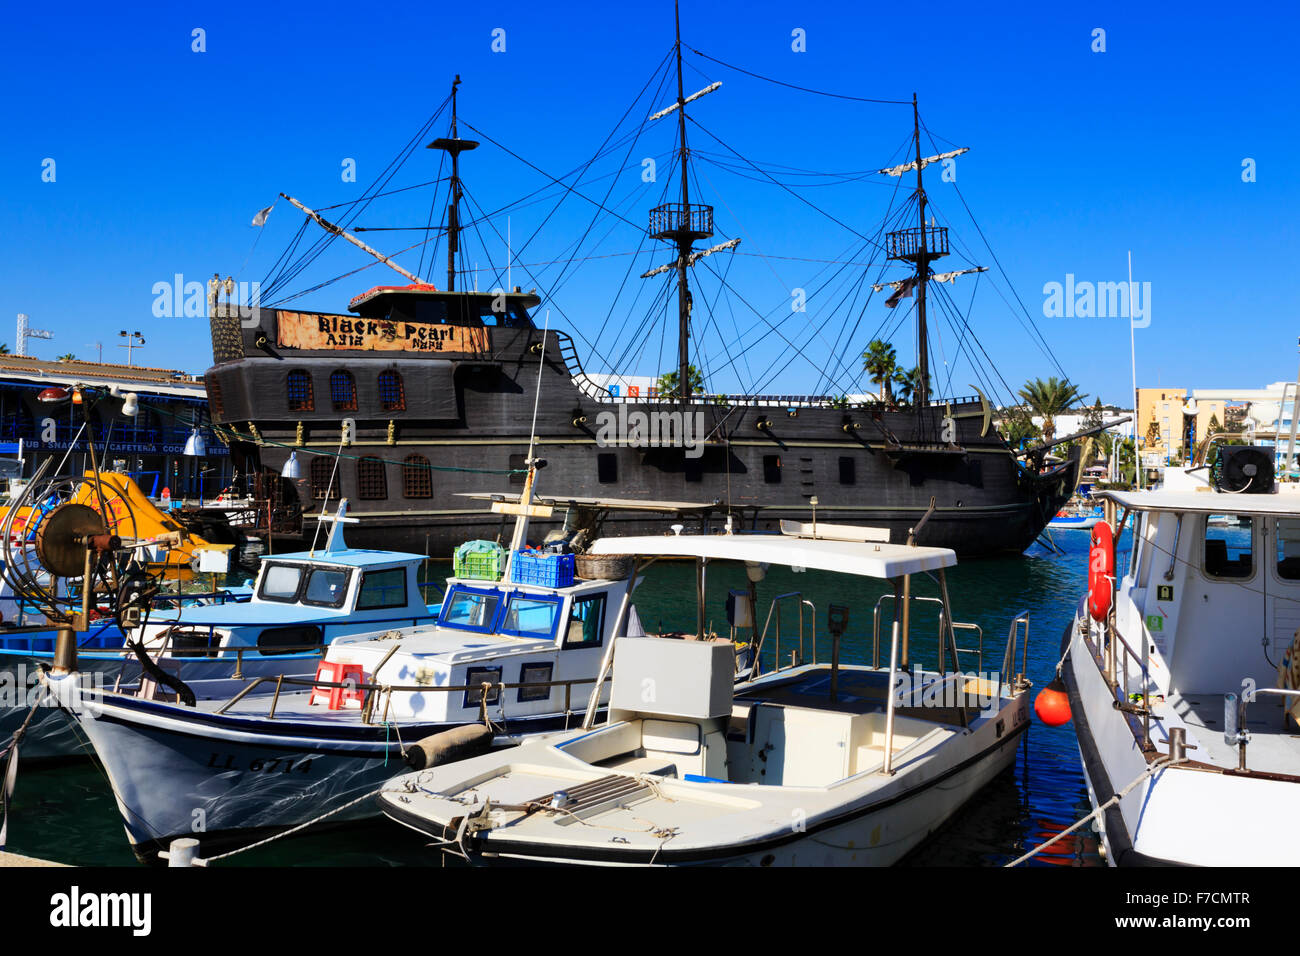 'Black Pearl' bateau de partie en Ayia Napa port avec bateaux de pêche locaux. Port d'Ayia Napa, Chypre. Banque D'Images